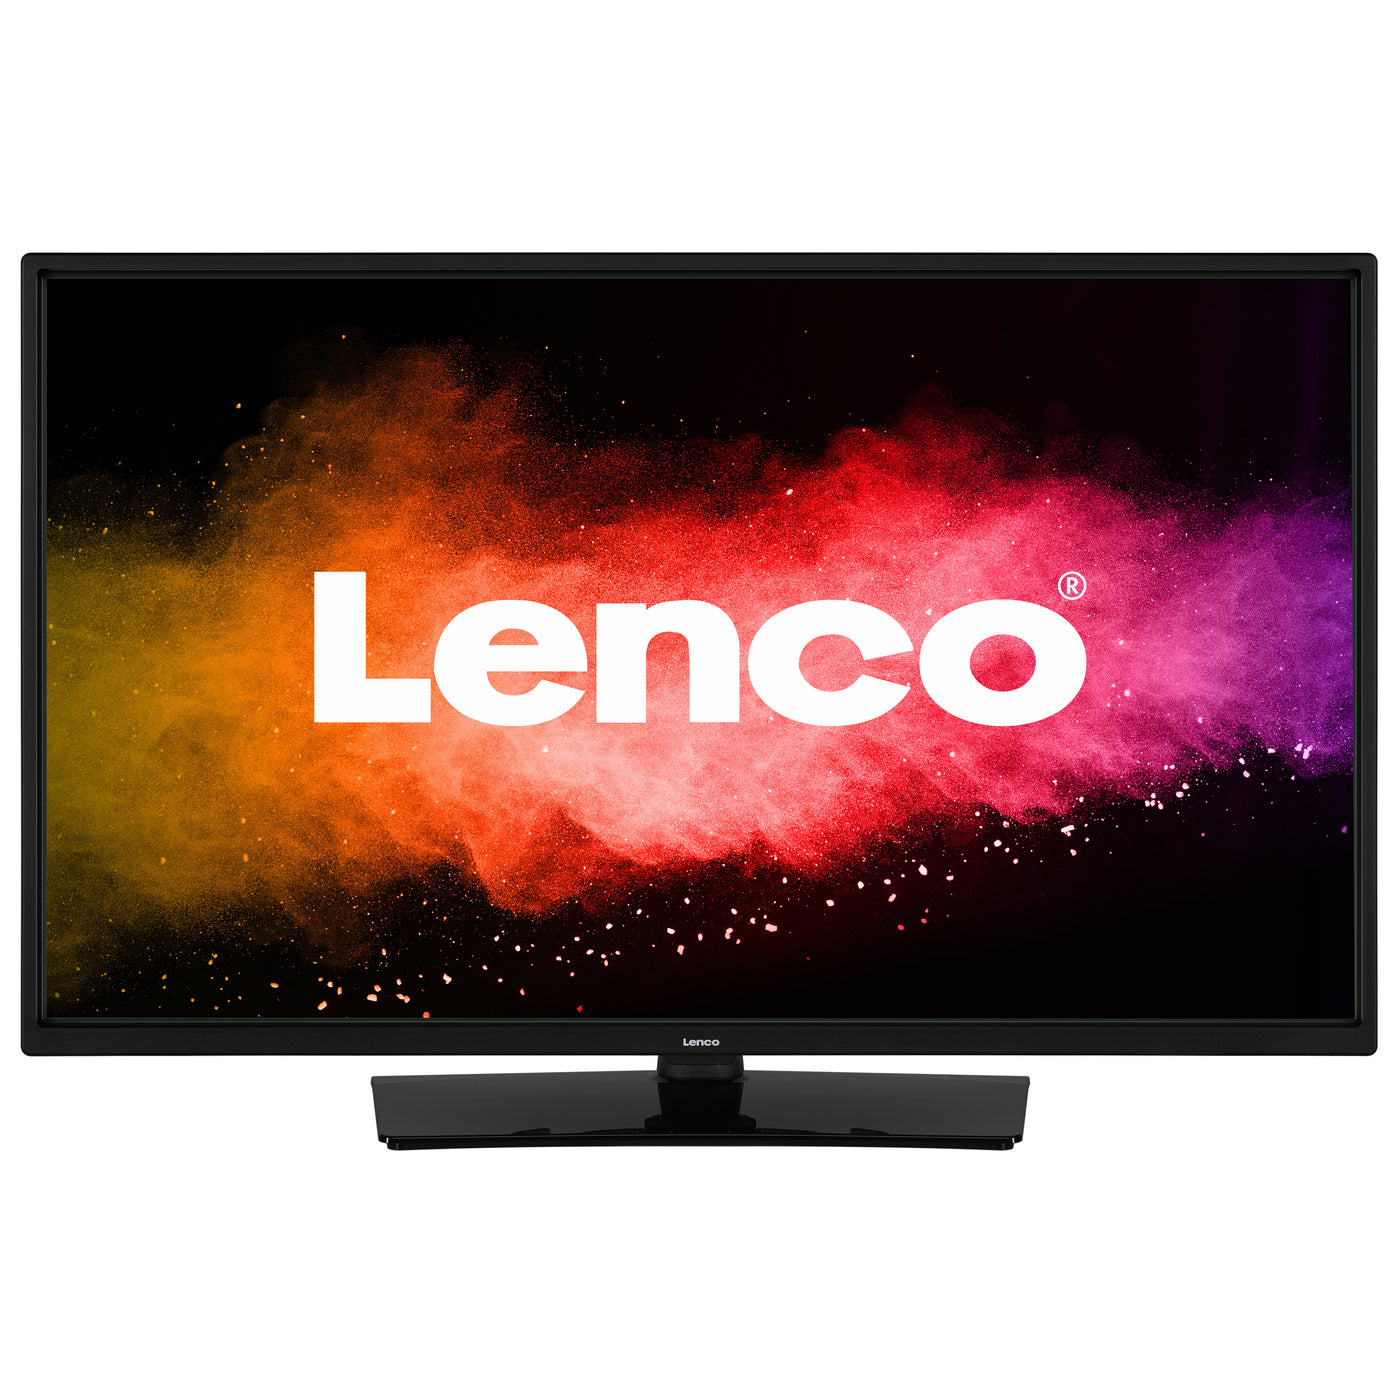 LENCO DVL-3273BK - 32" Smart TV met ingebouwde DVD speler, zwart